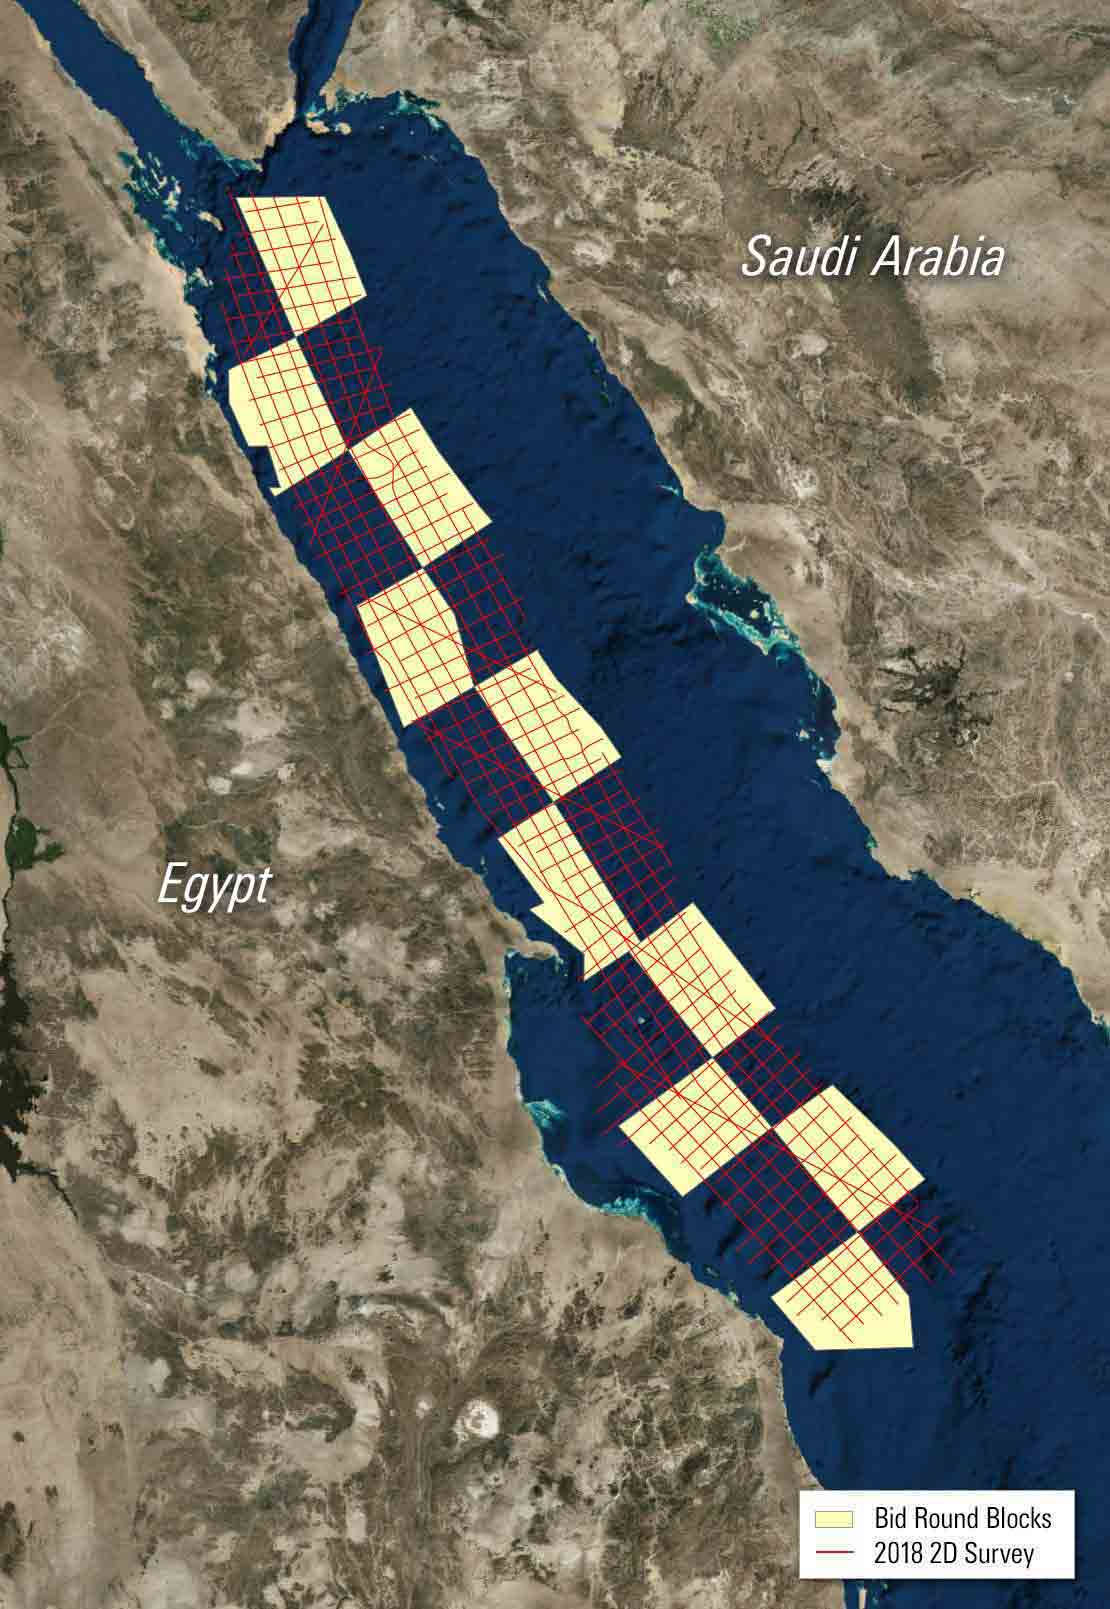 Egypt Red Sea bid round blacks map